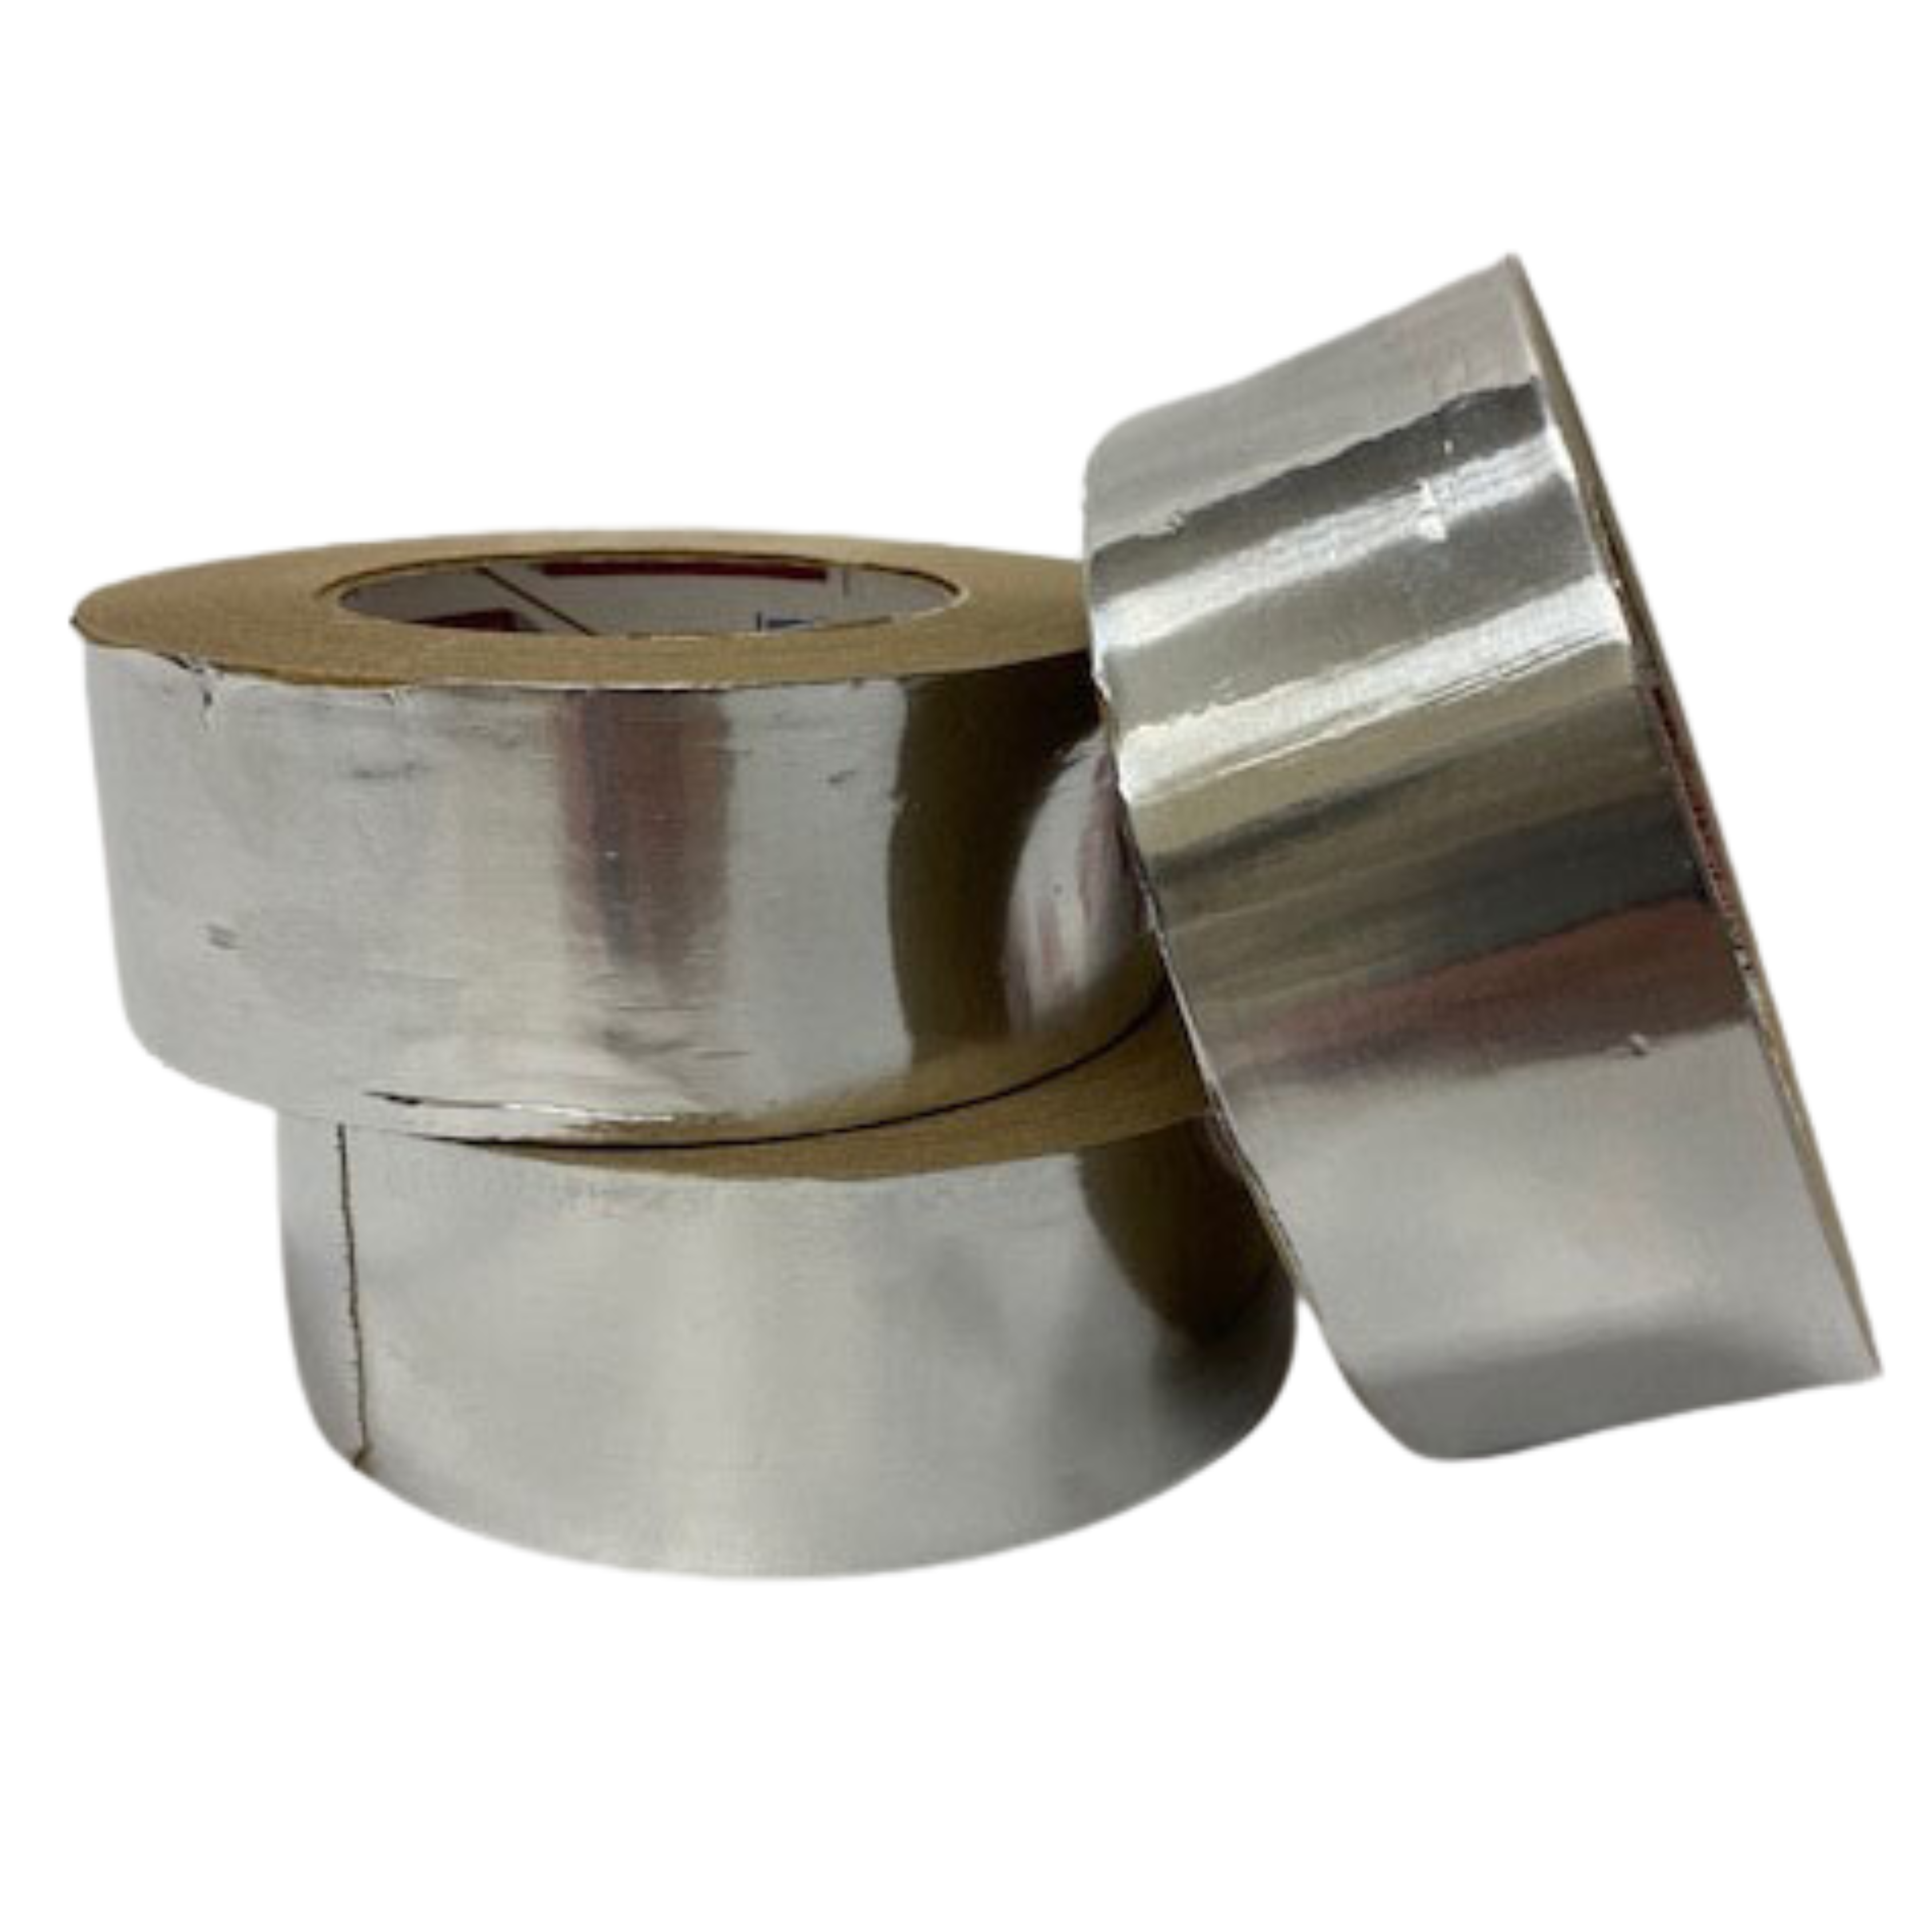 Three rolls of silver seam seal tape